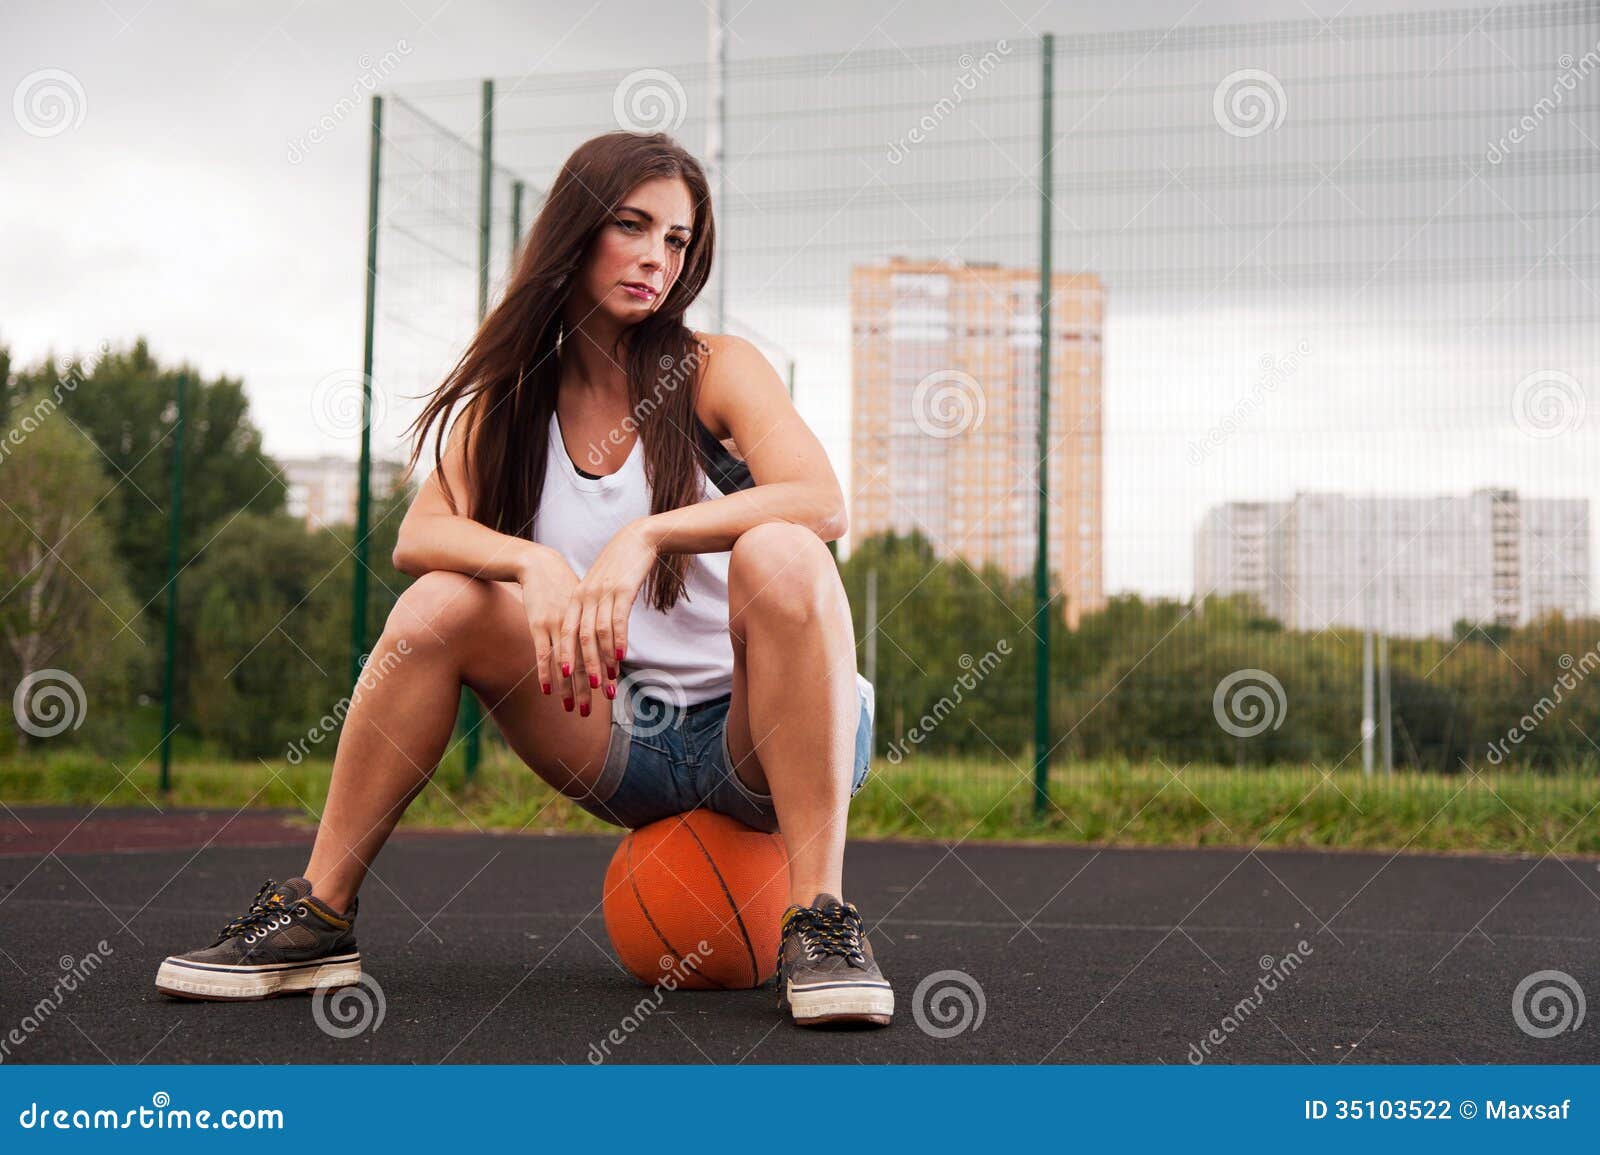 Присела снизу. Девушки на корточках. Фотосессия на спортивной площадке. Девушка спорт сидит. Девушка на баскетбольной площадке Силит.